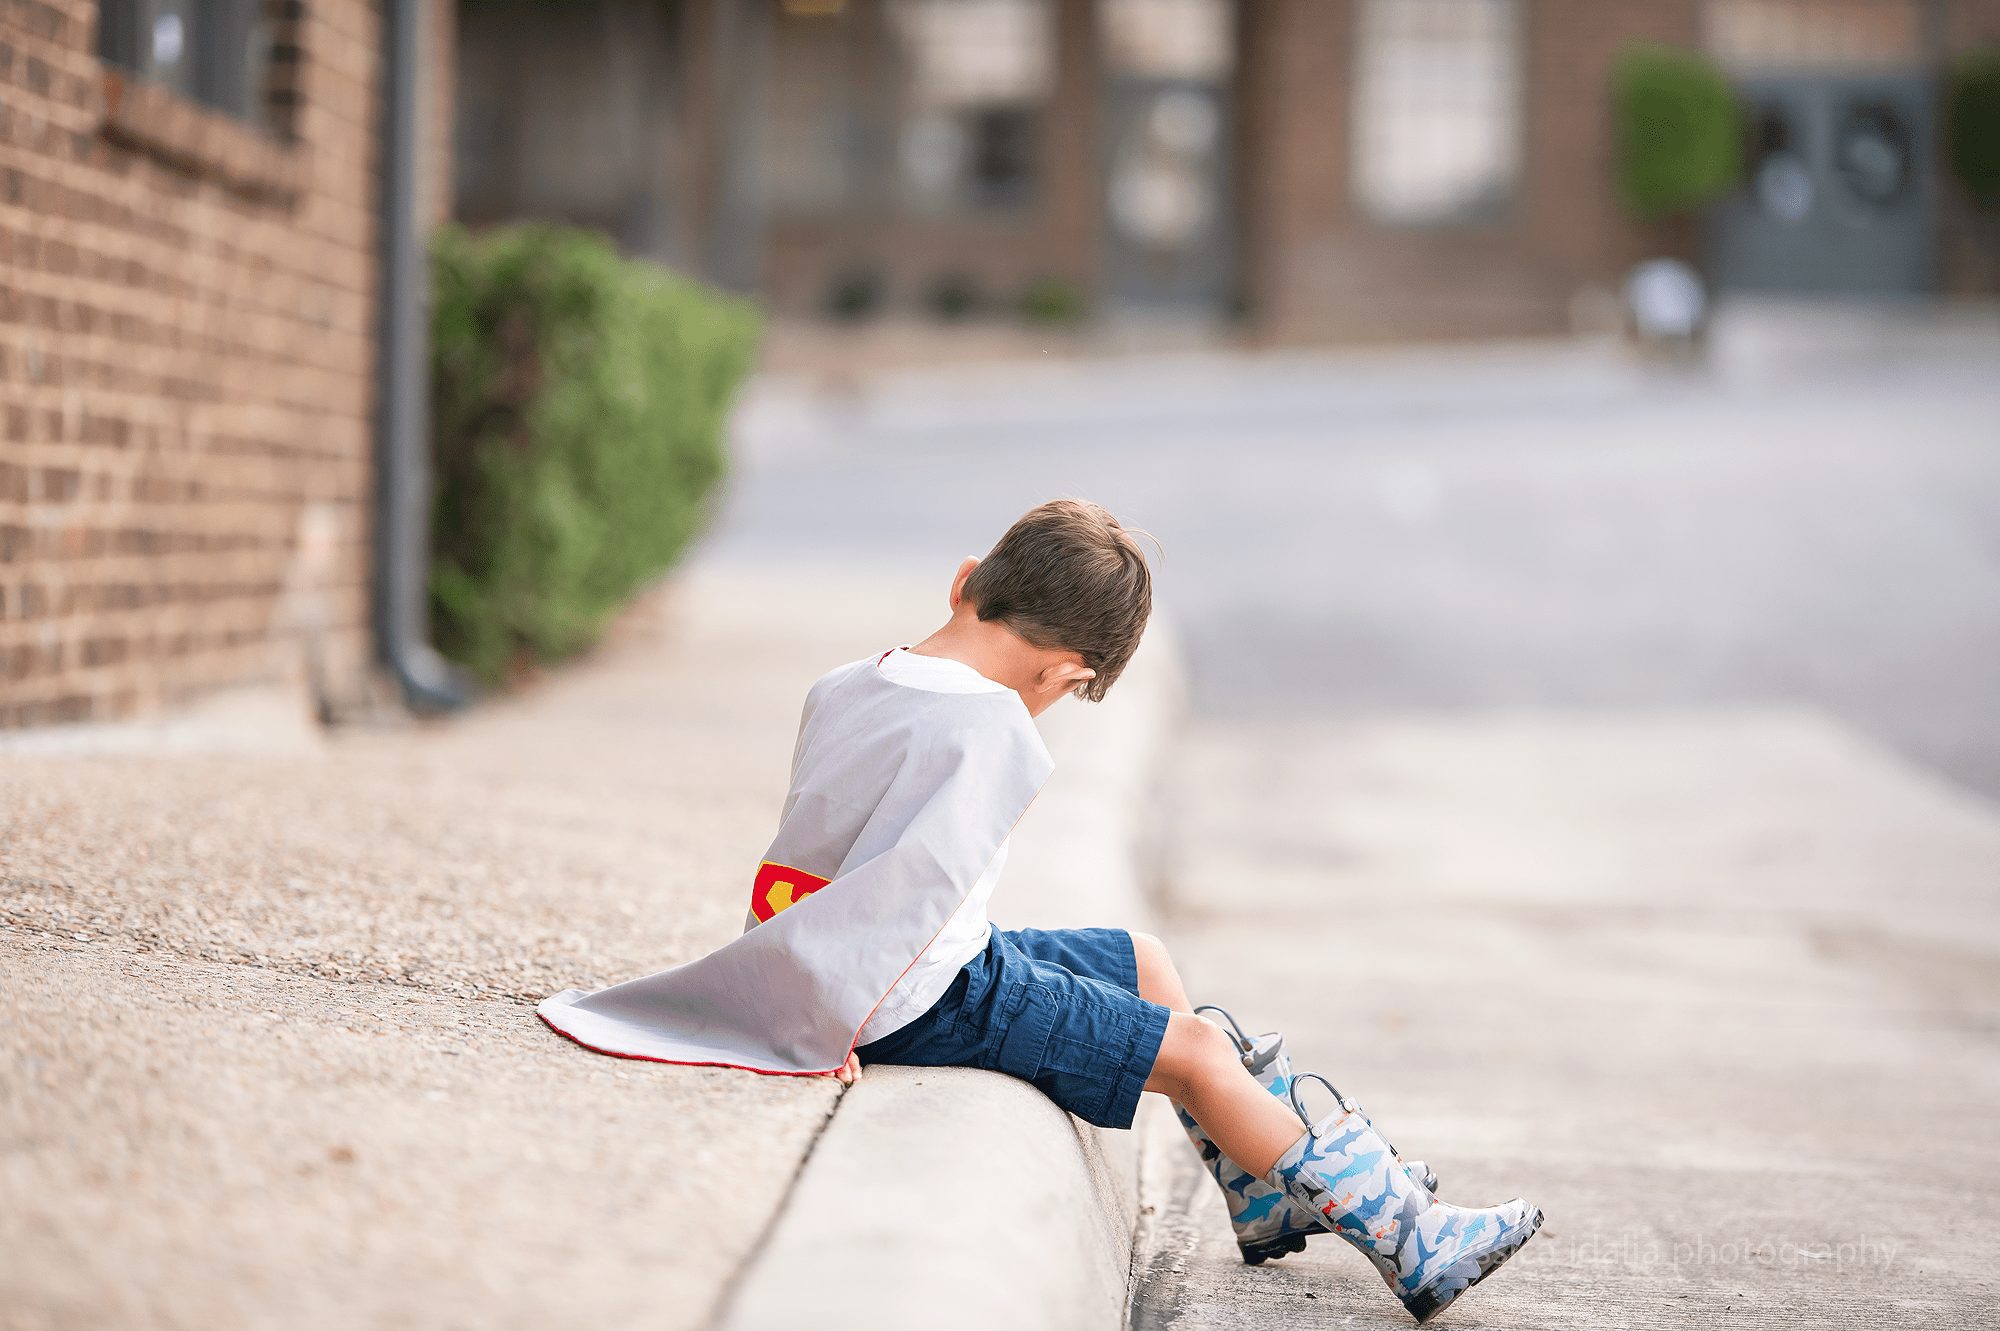 Boy with cape sitting on curb